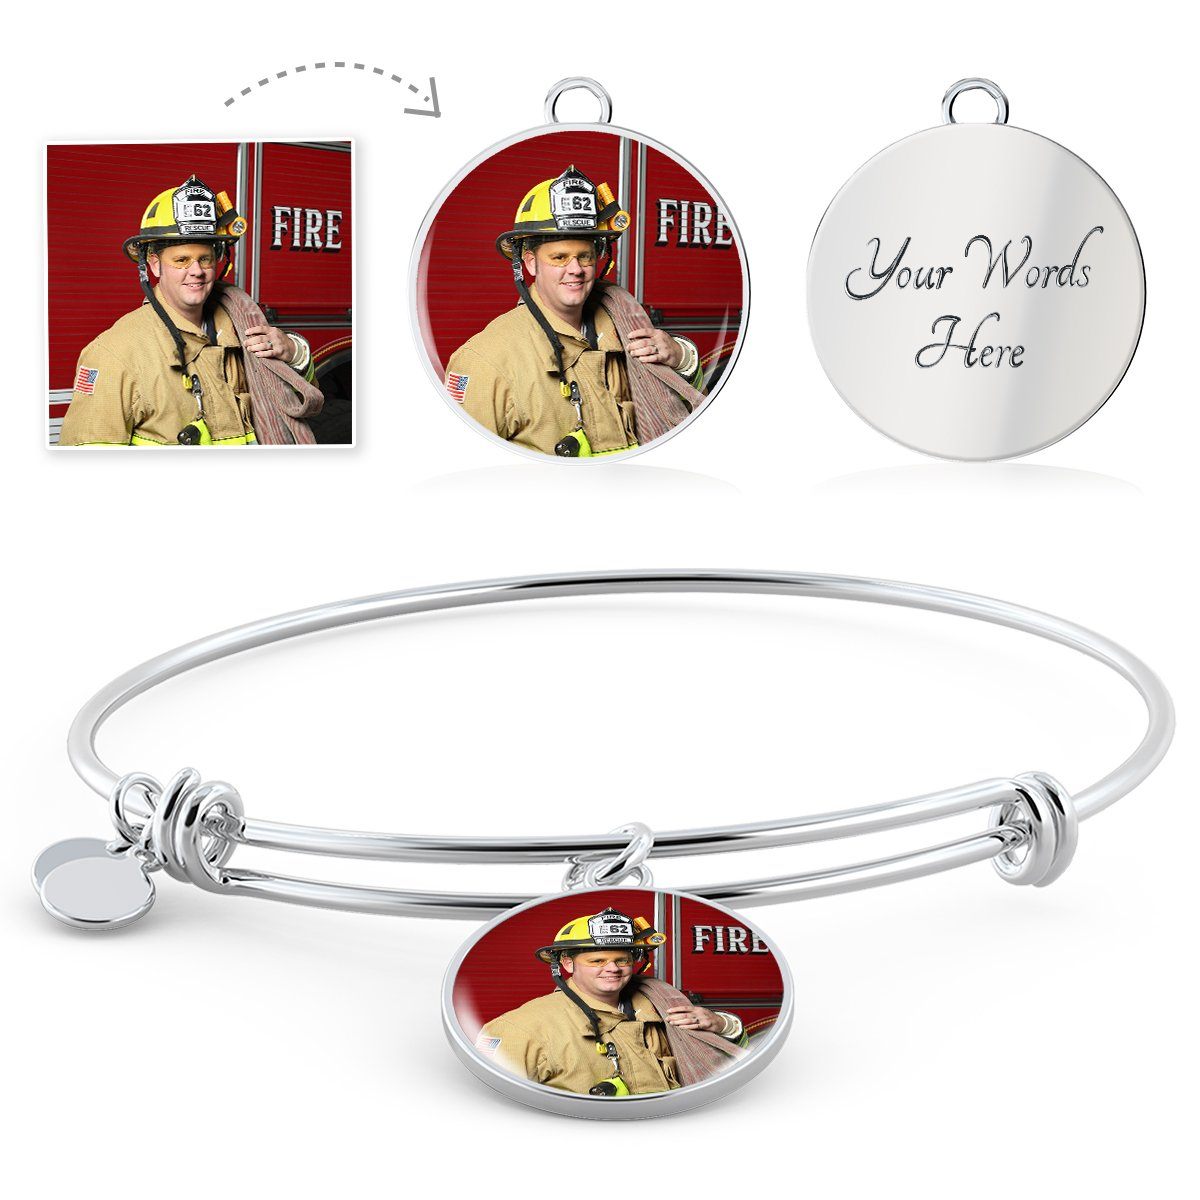 Firefighter Personalized Photo Circle Bangle Bracelet - Heroic Defender